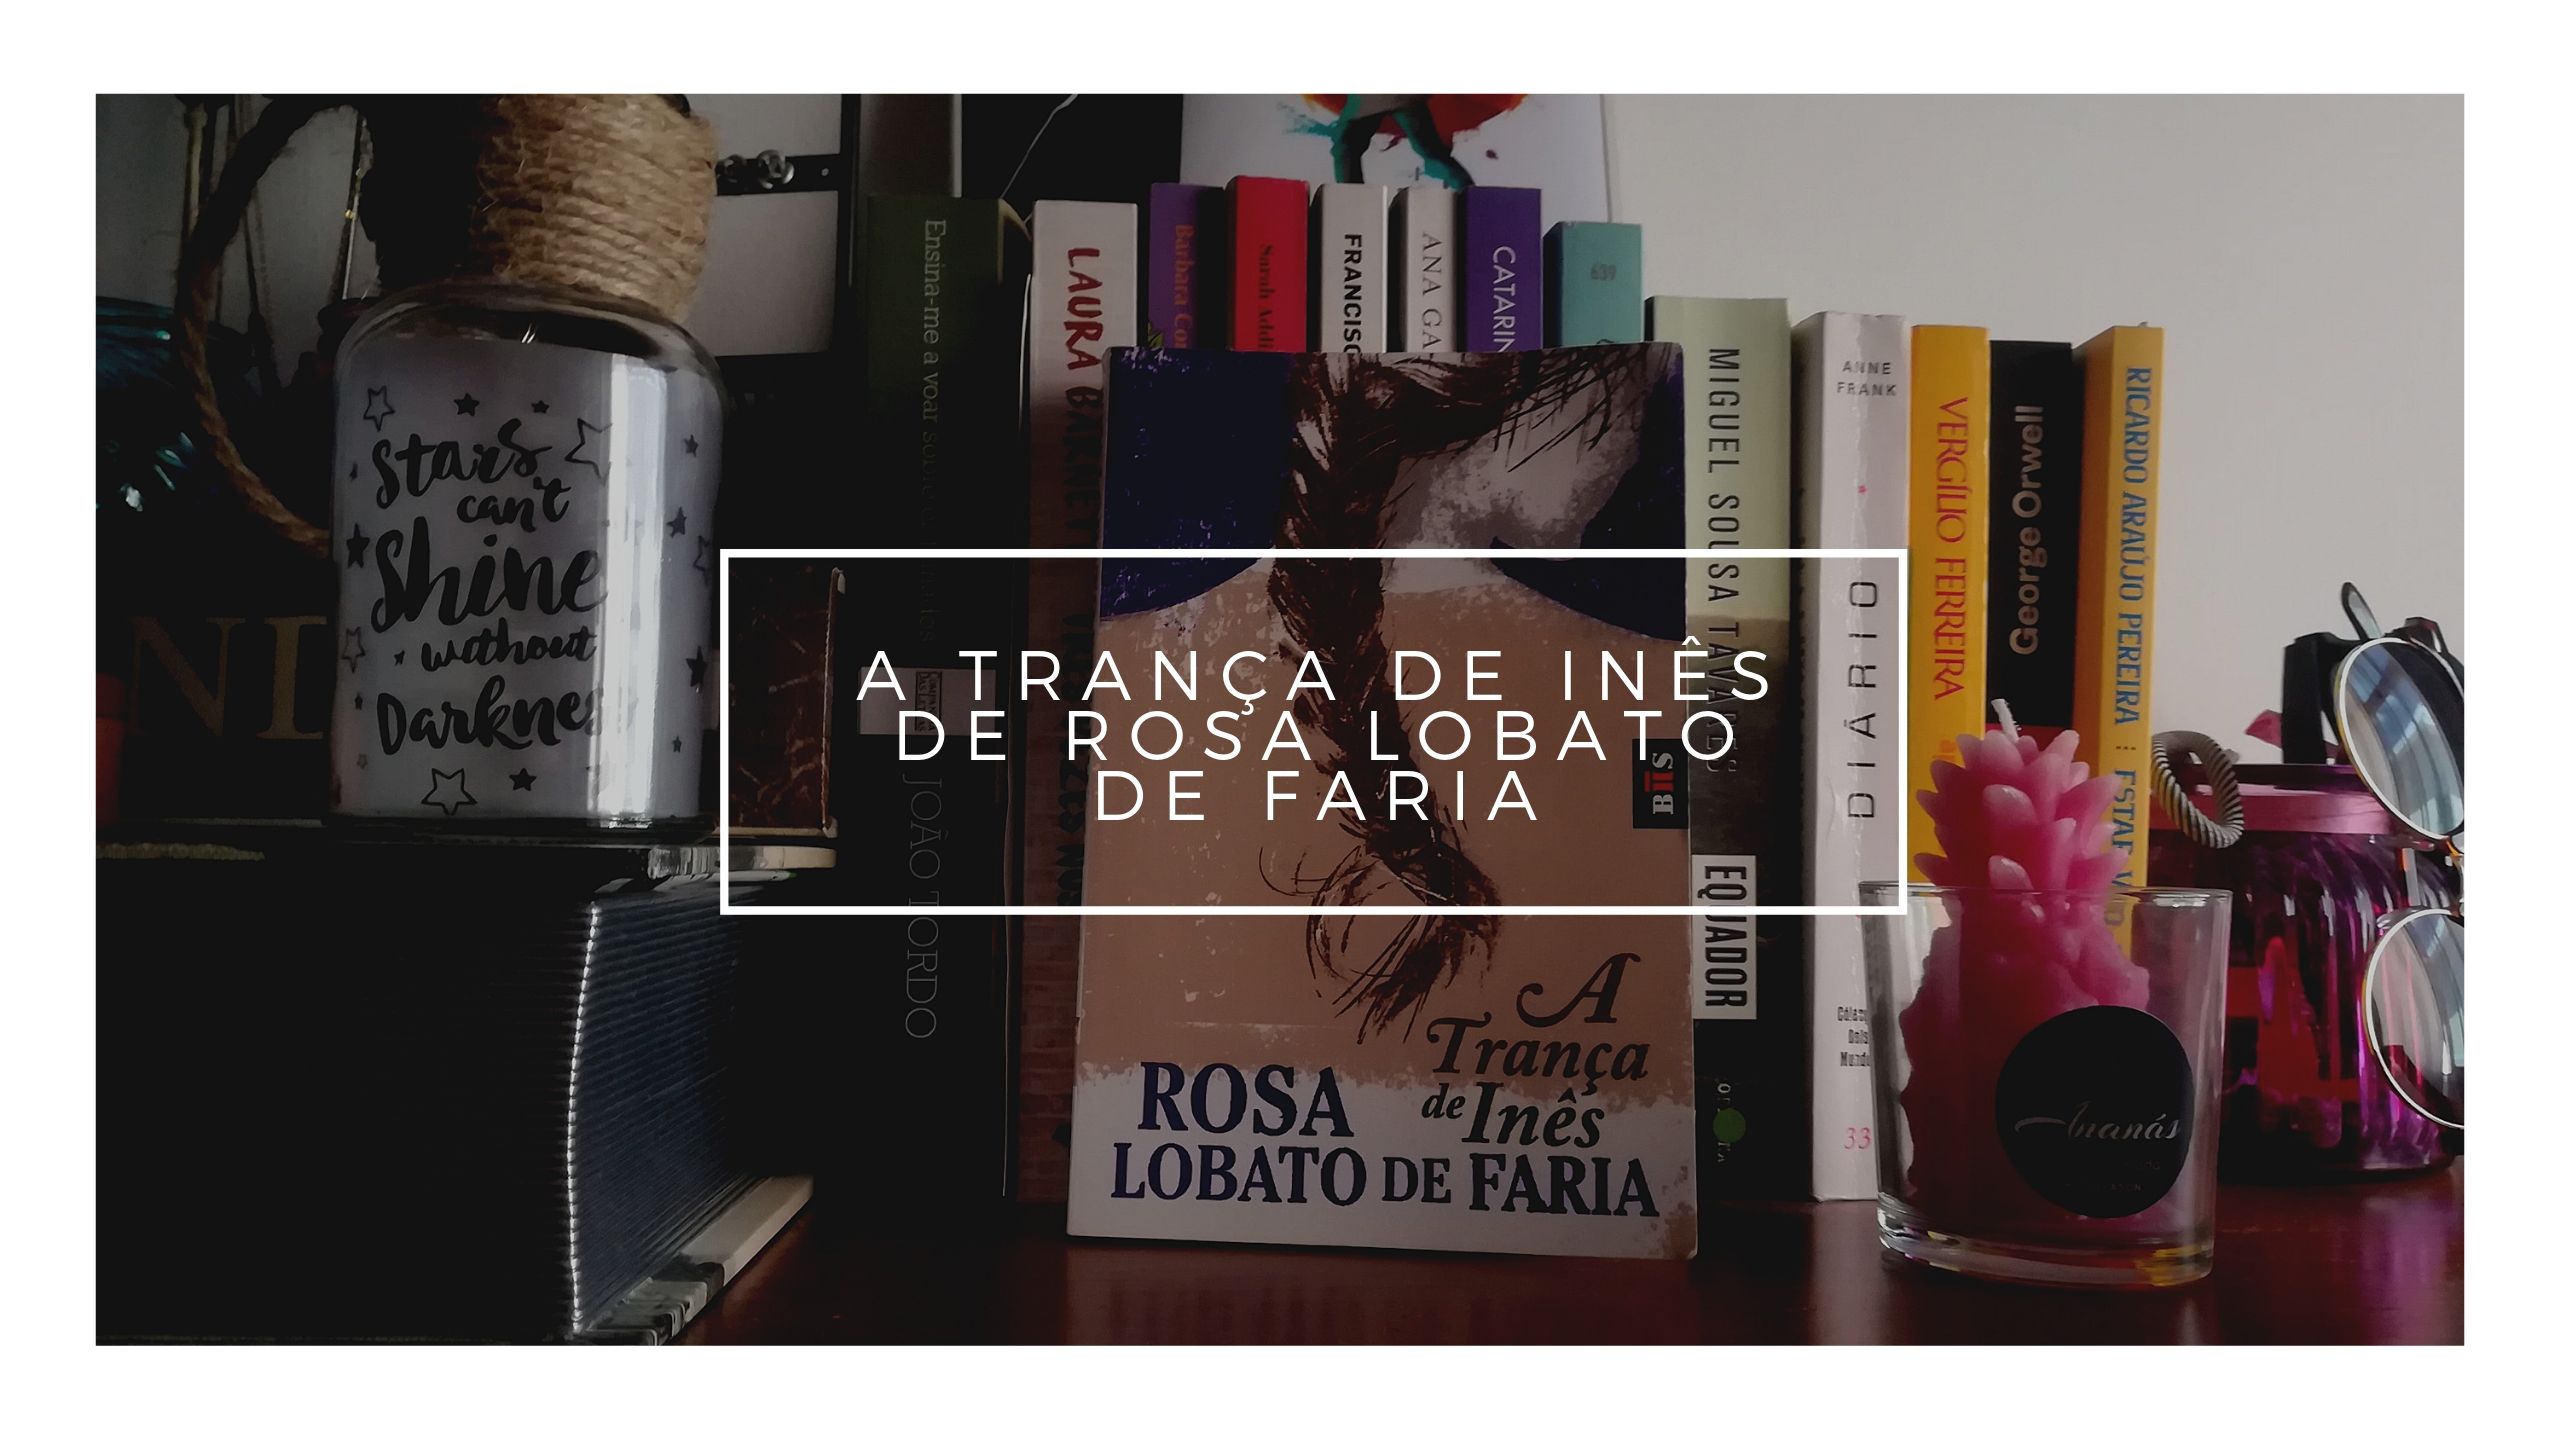 A Trança de Inês by Rosa Lobato de Faria